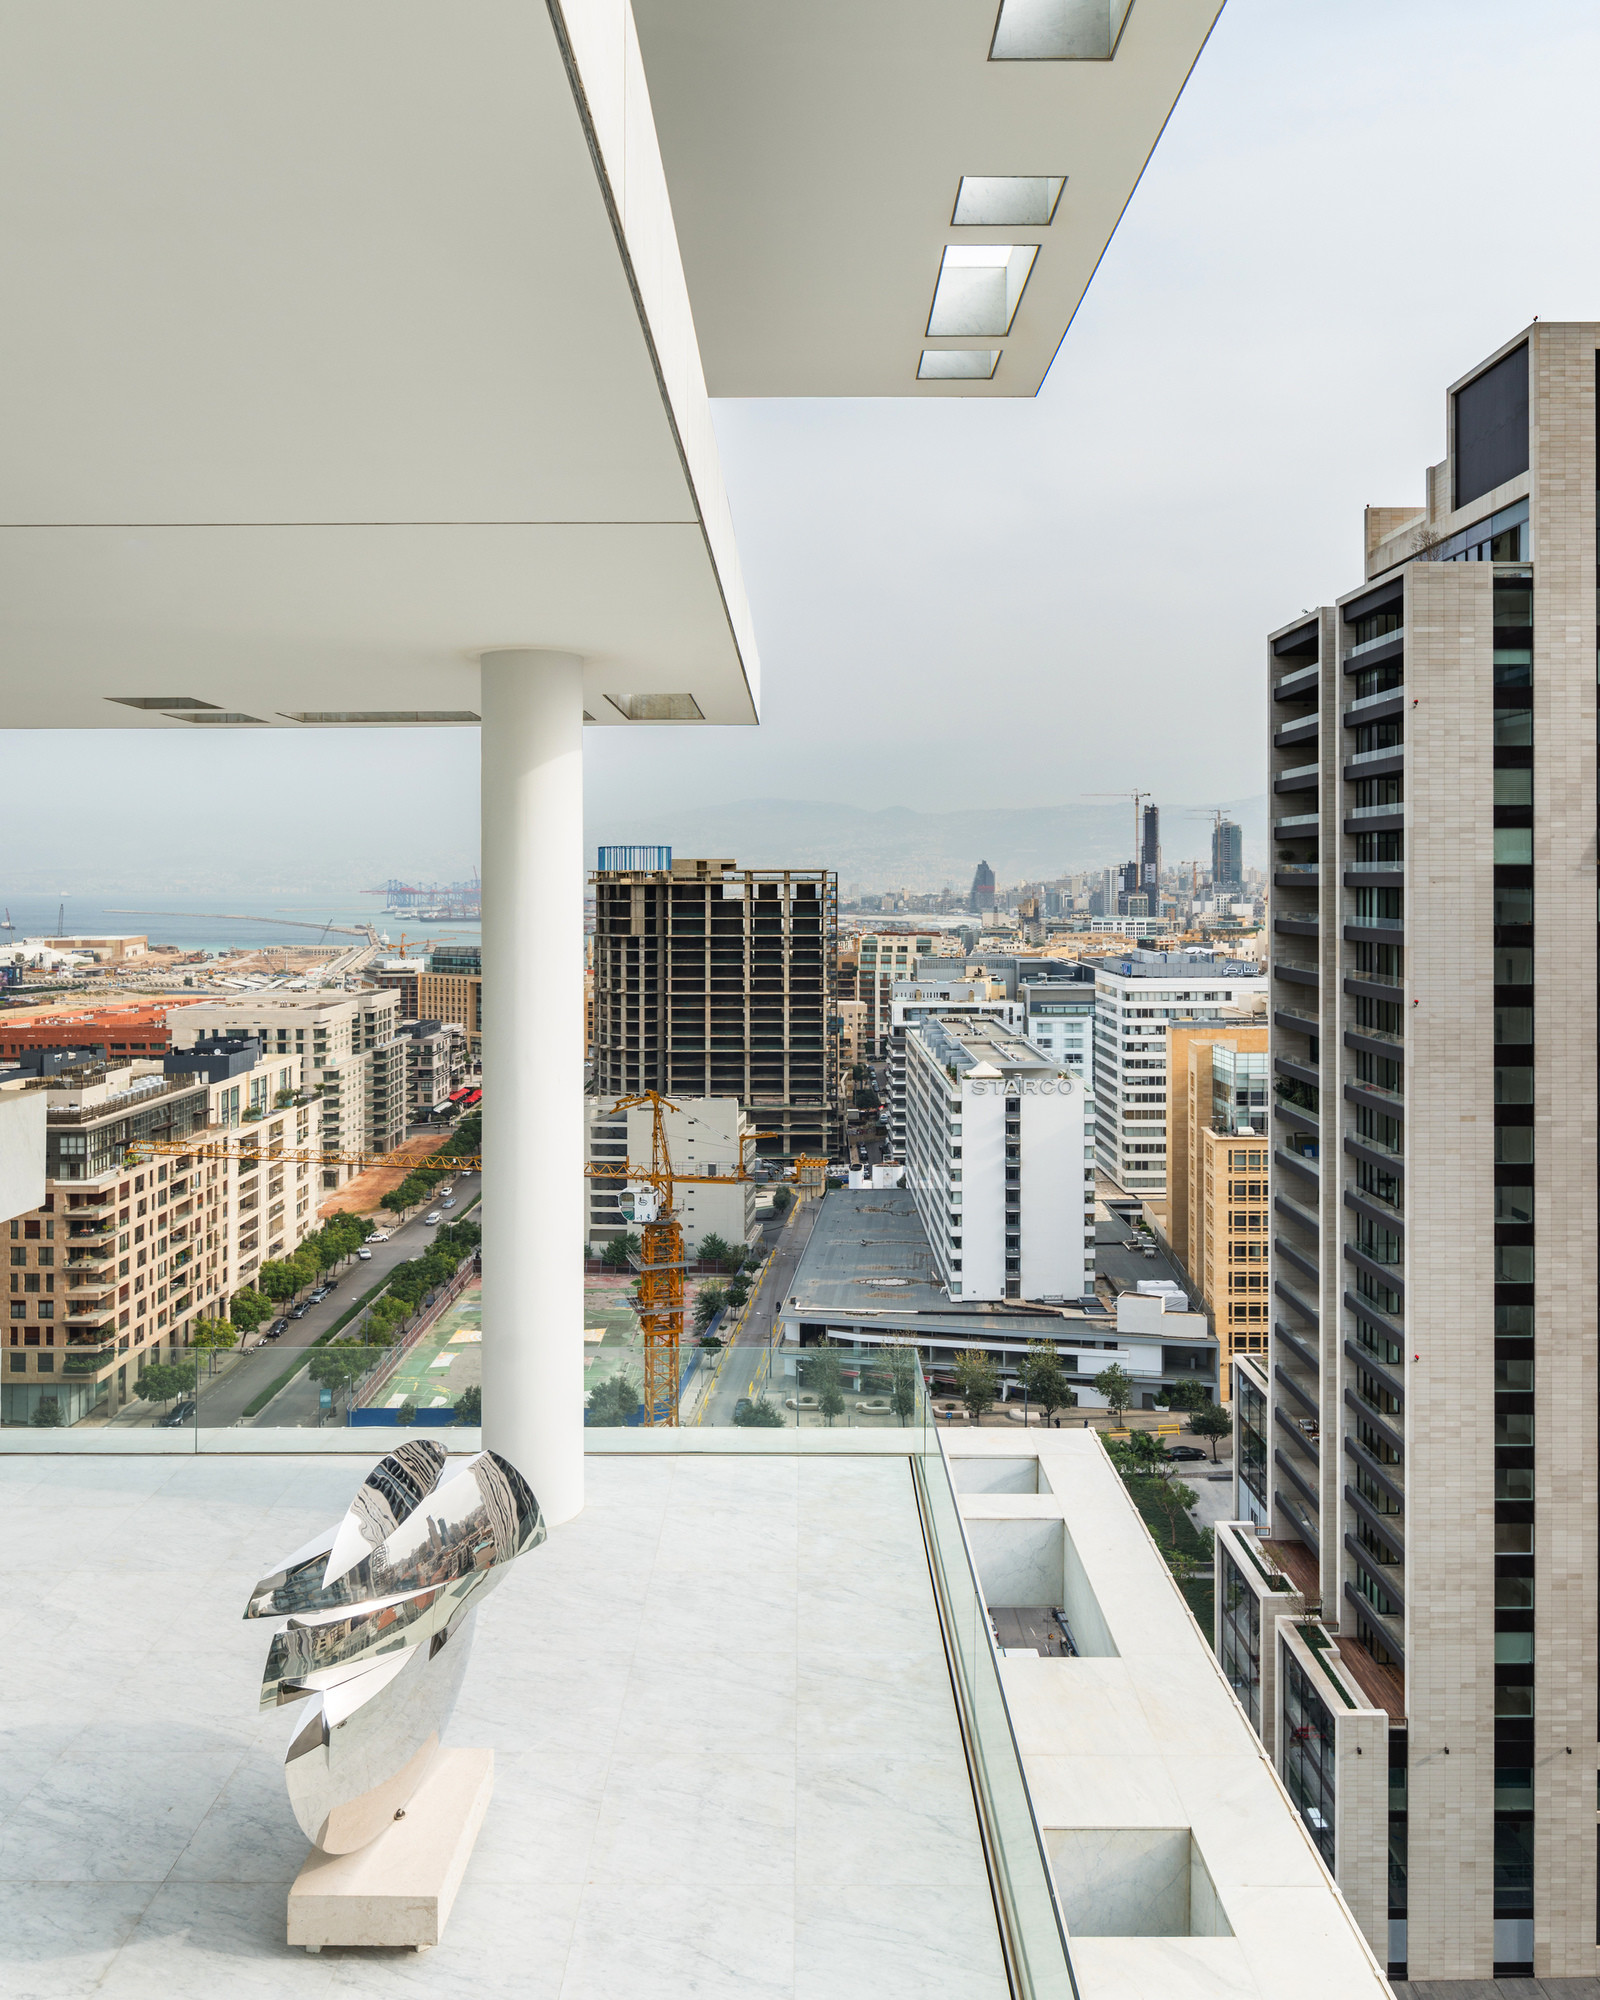 Residential complex Beirut Terraces from Herzog & de Meuron